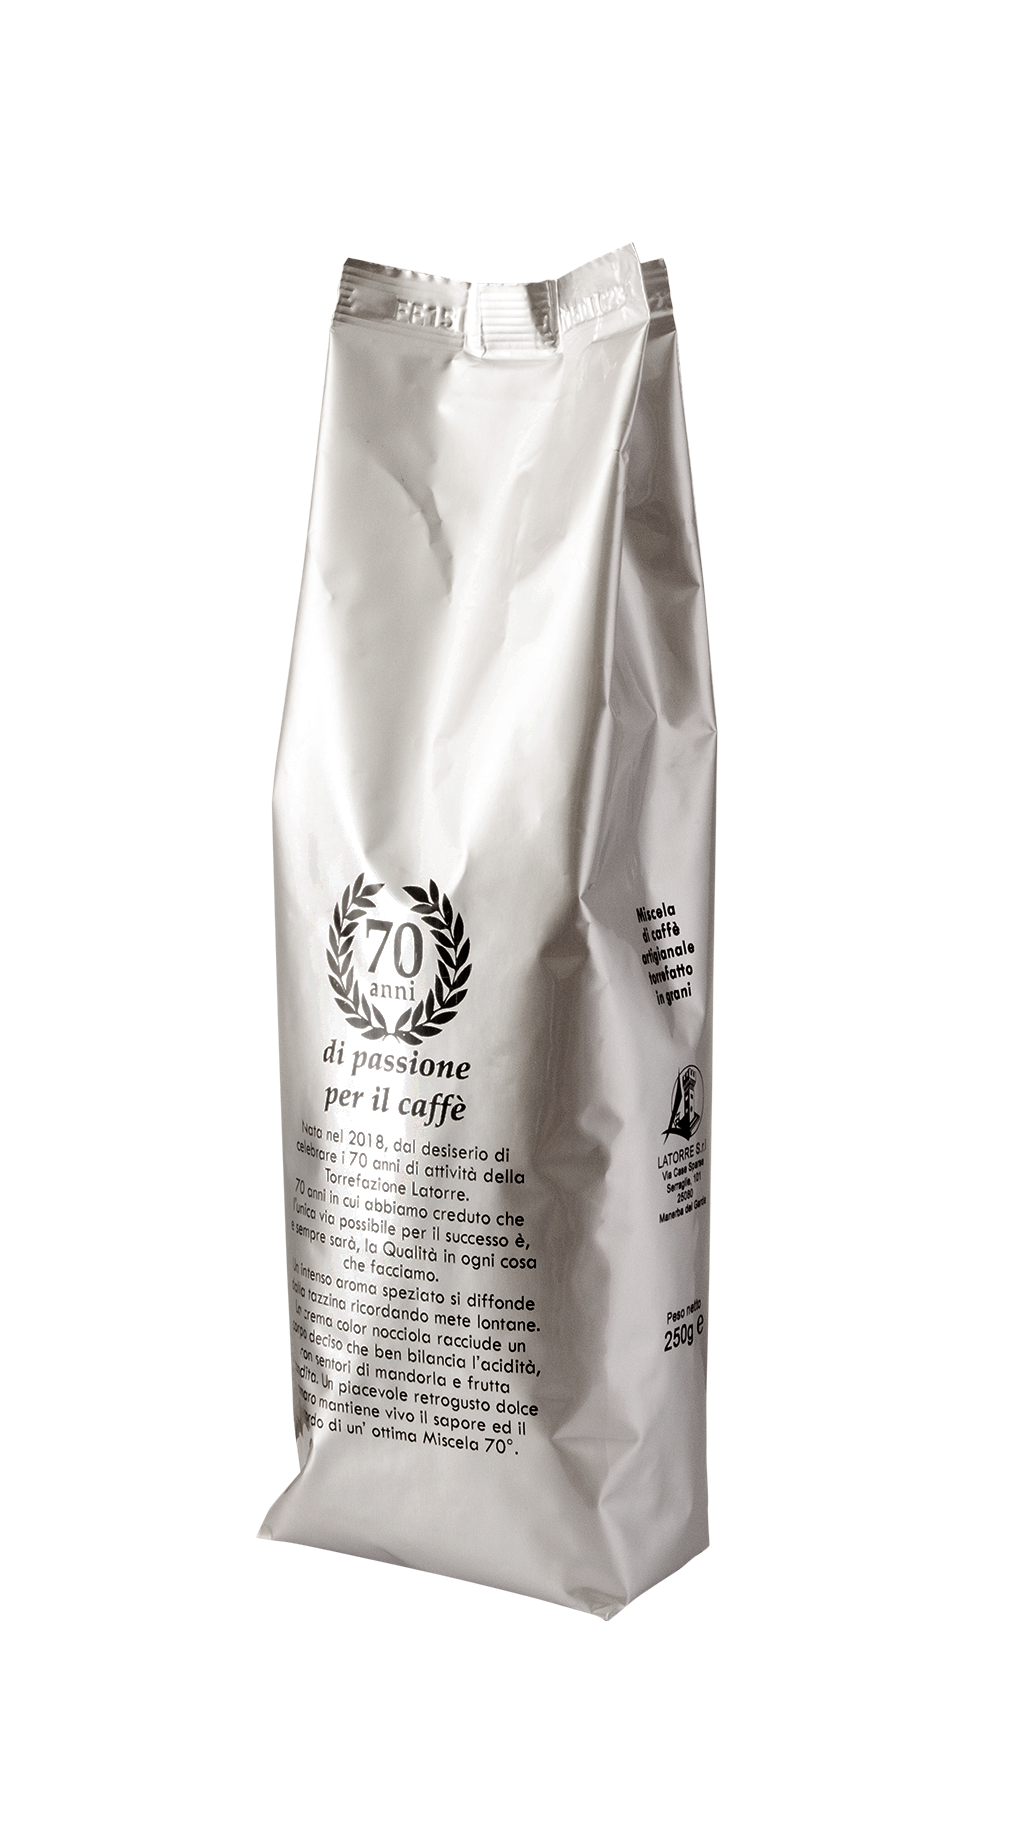 sacchetto da 250 gr in grani caffè 70°